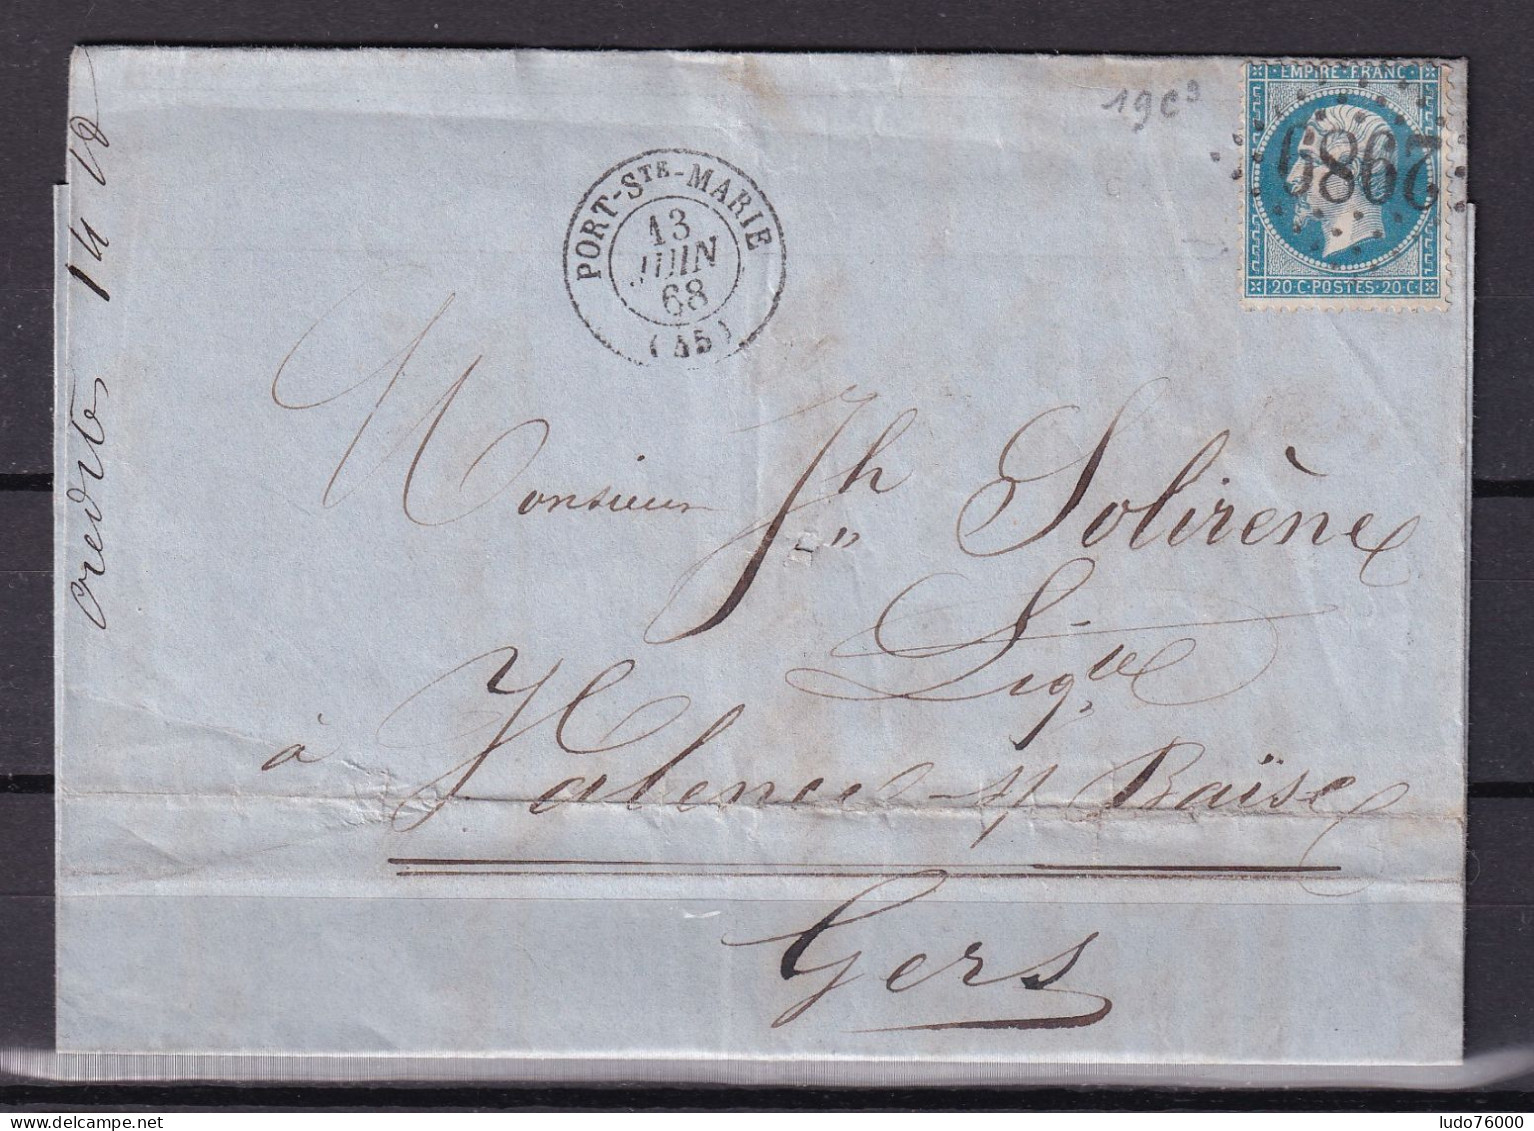 D 807 / NAPOLEON N° 22 SUR LETTRE - 1862 Napoleone III